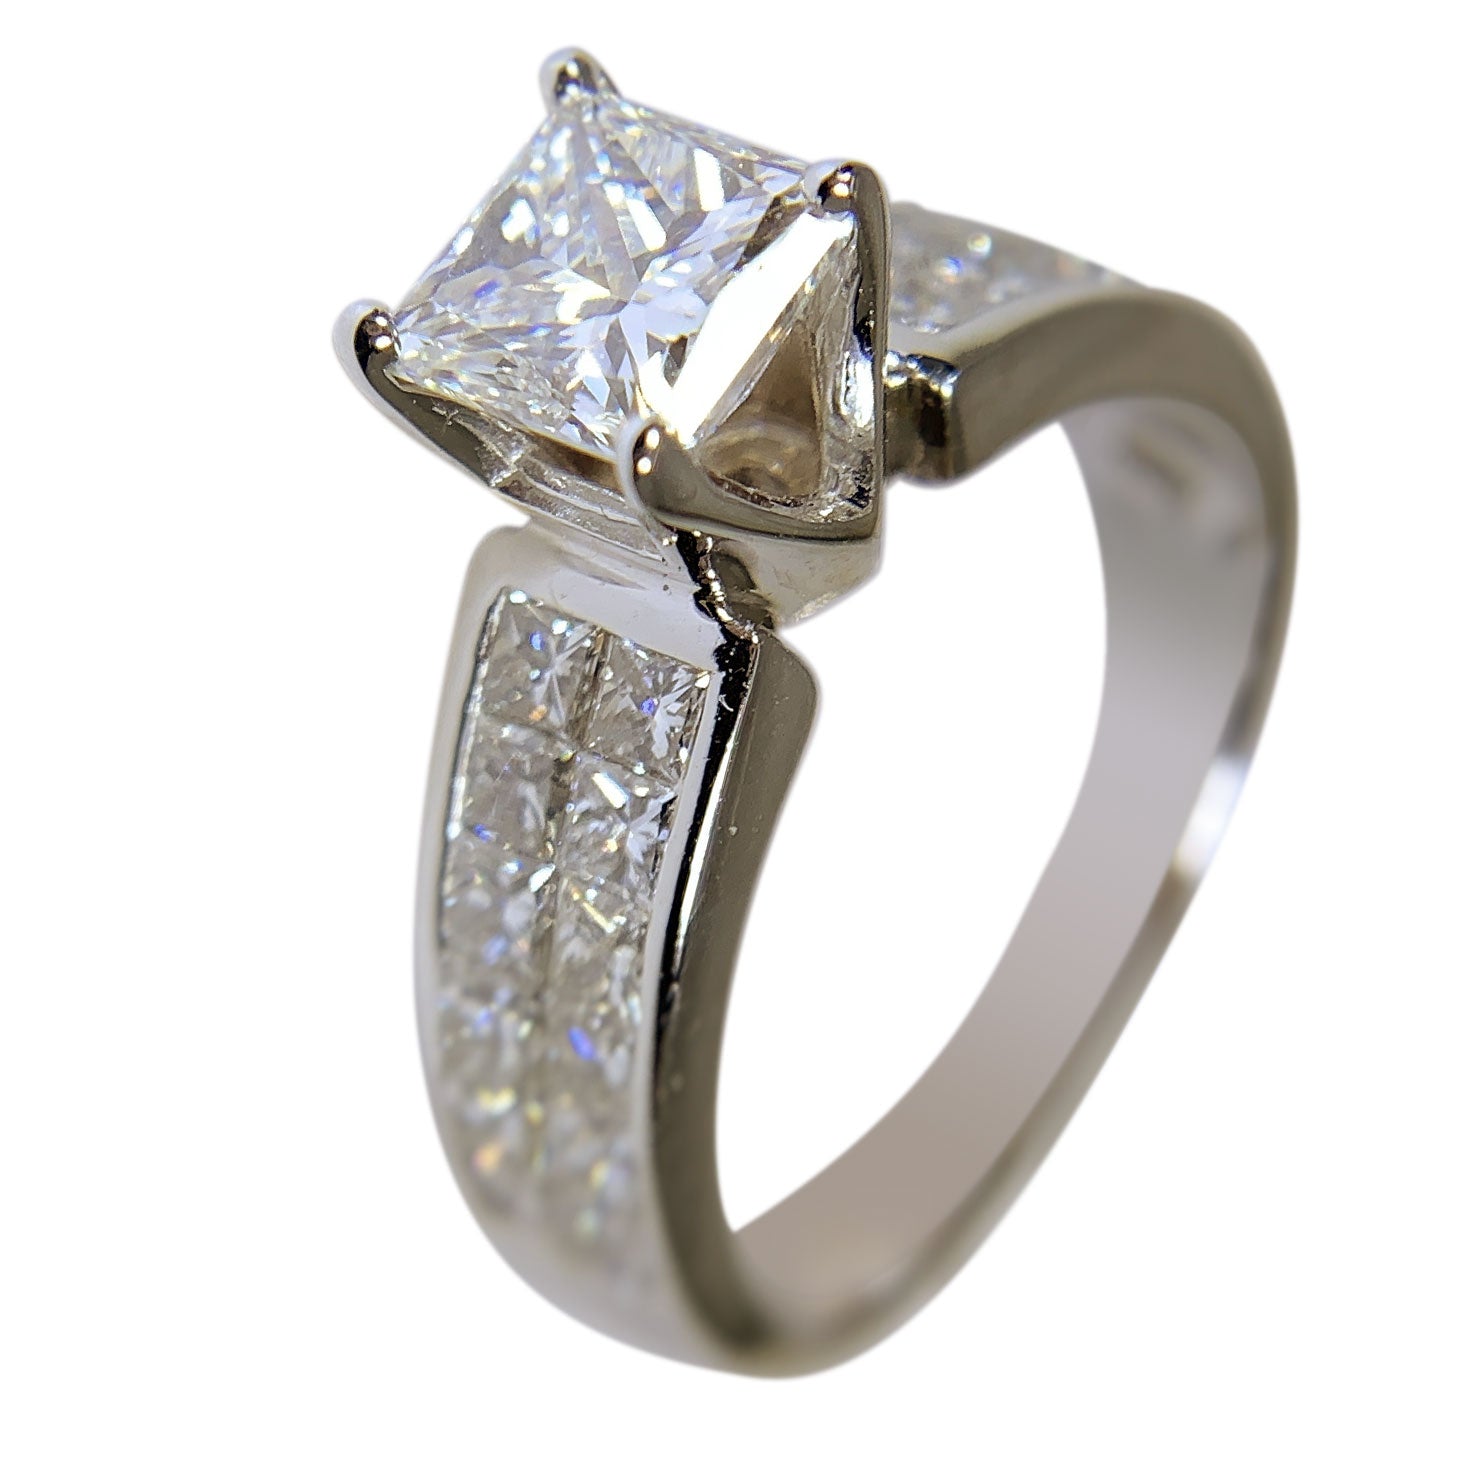 18 KT WHITE GOLD PRINCESS DIAMOND RING - 2.48 CT